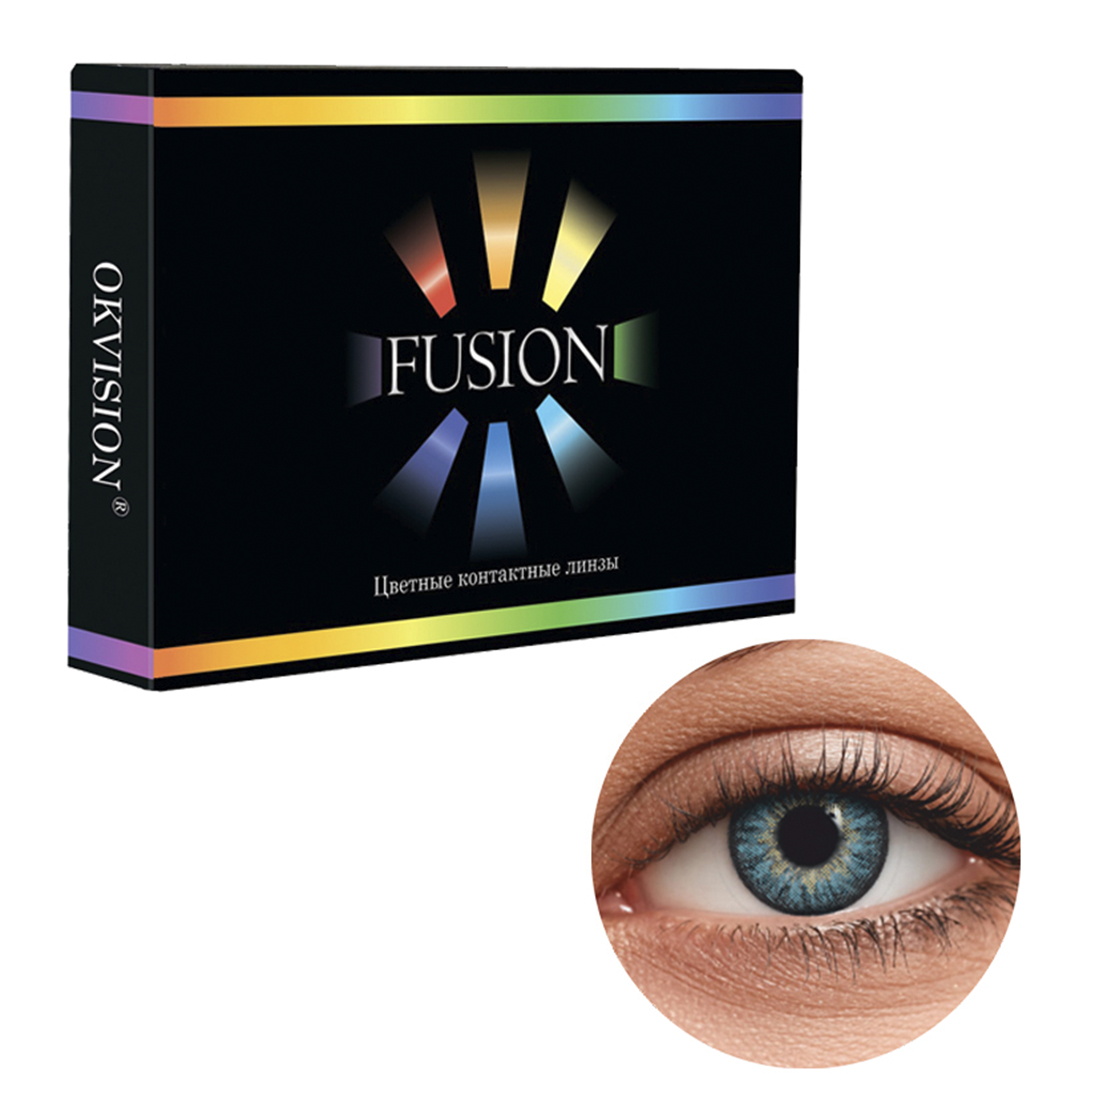 Цветные контактные линзы OKVision Fusion monthly R 8.6 -5.00 цвет Sky Blue 2 шт 1 месяц - фото 1